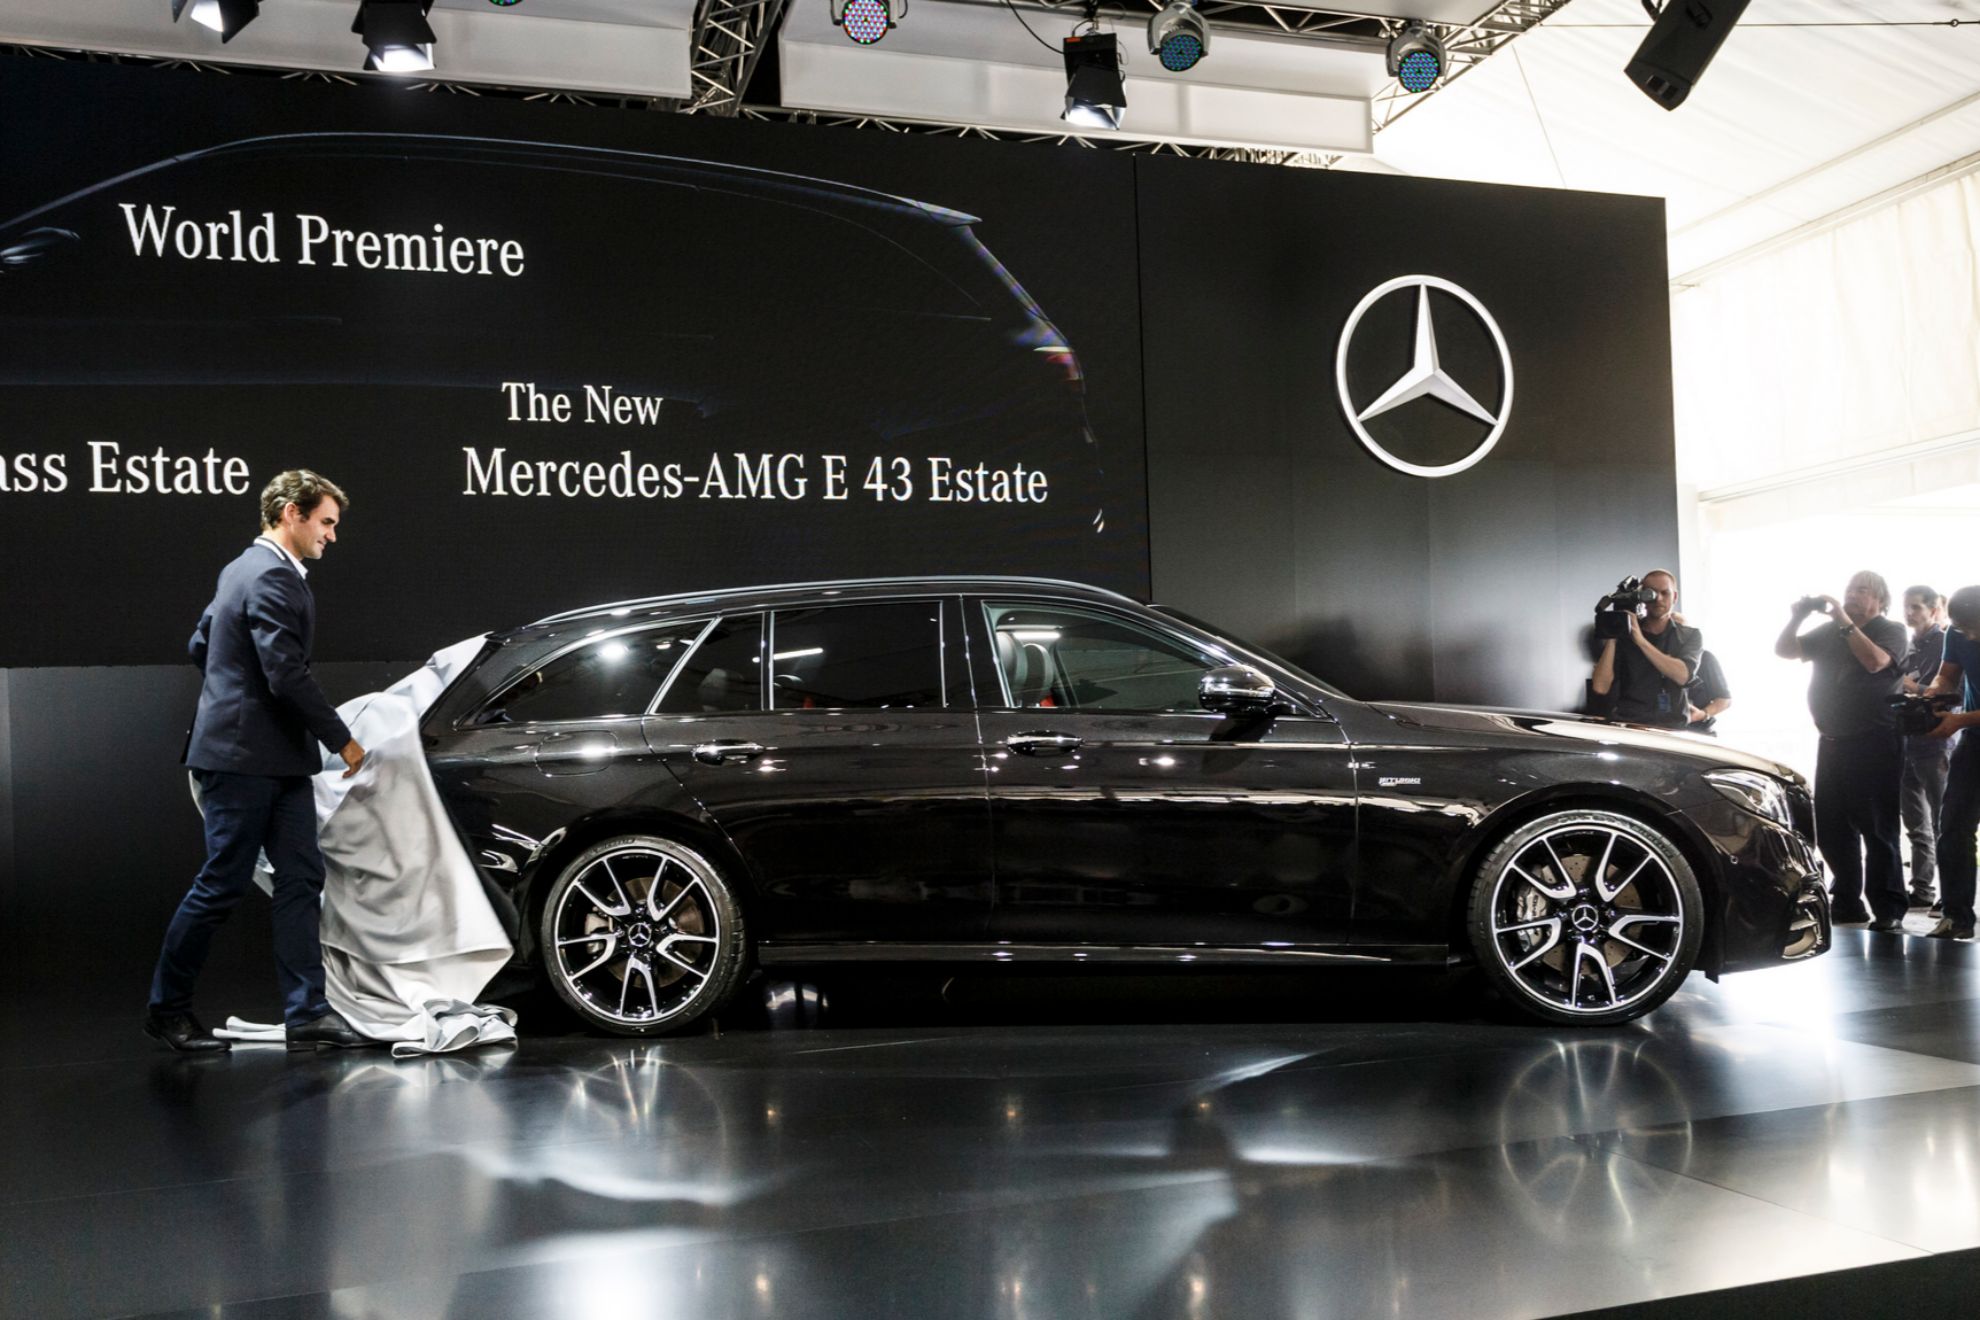 Roger Federer's incredible car collection: His spectacular Mercedes-Benz